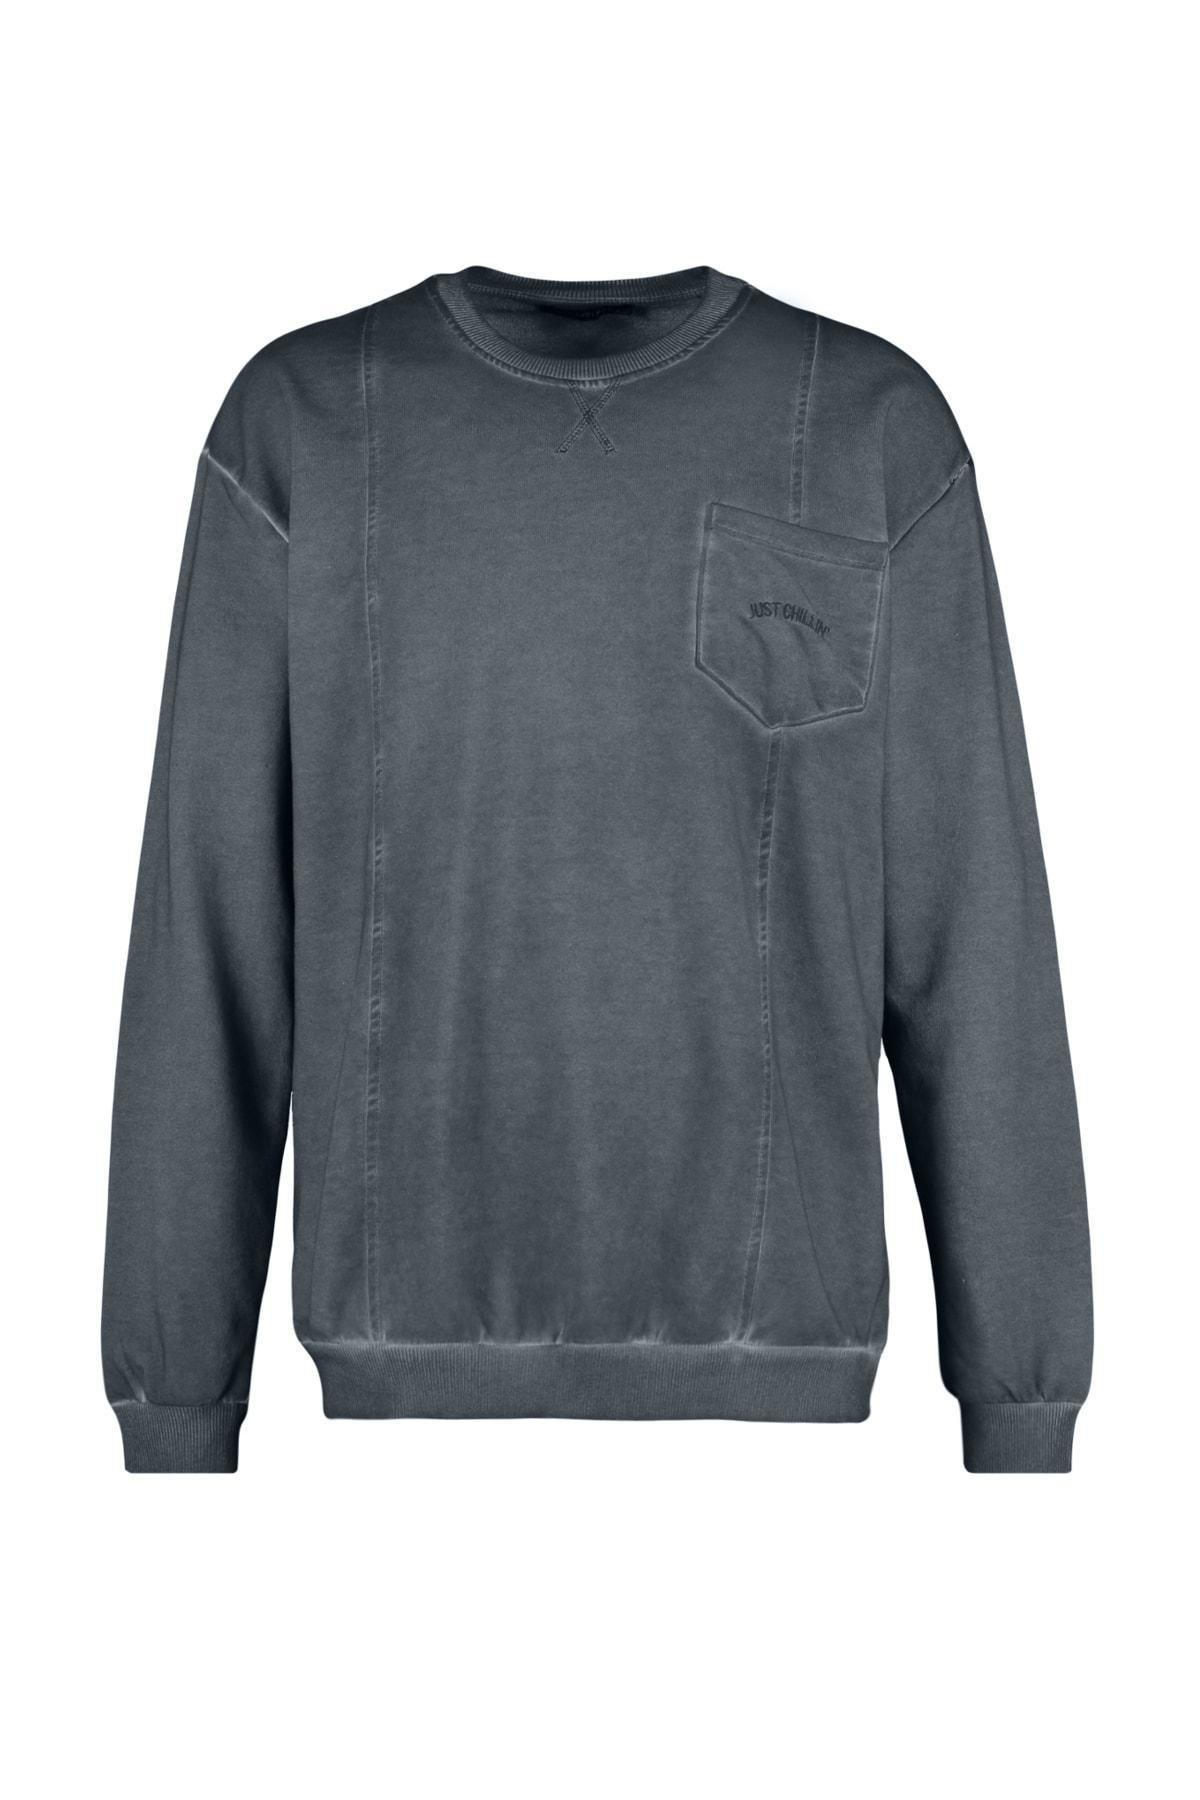 Trendyol - Grey Relaxed Print Crew Neck Sweatshirt